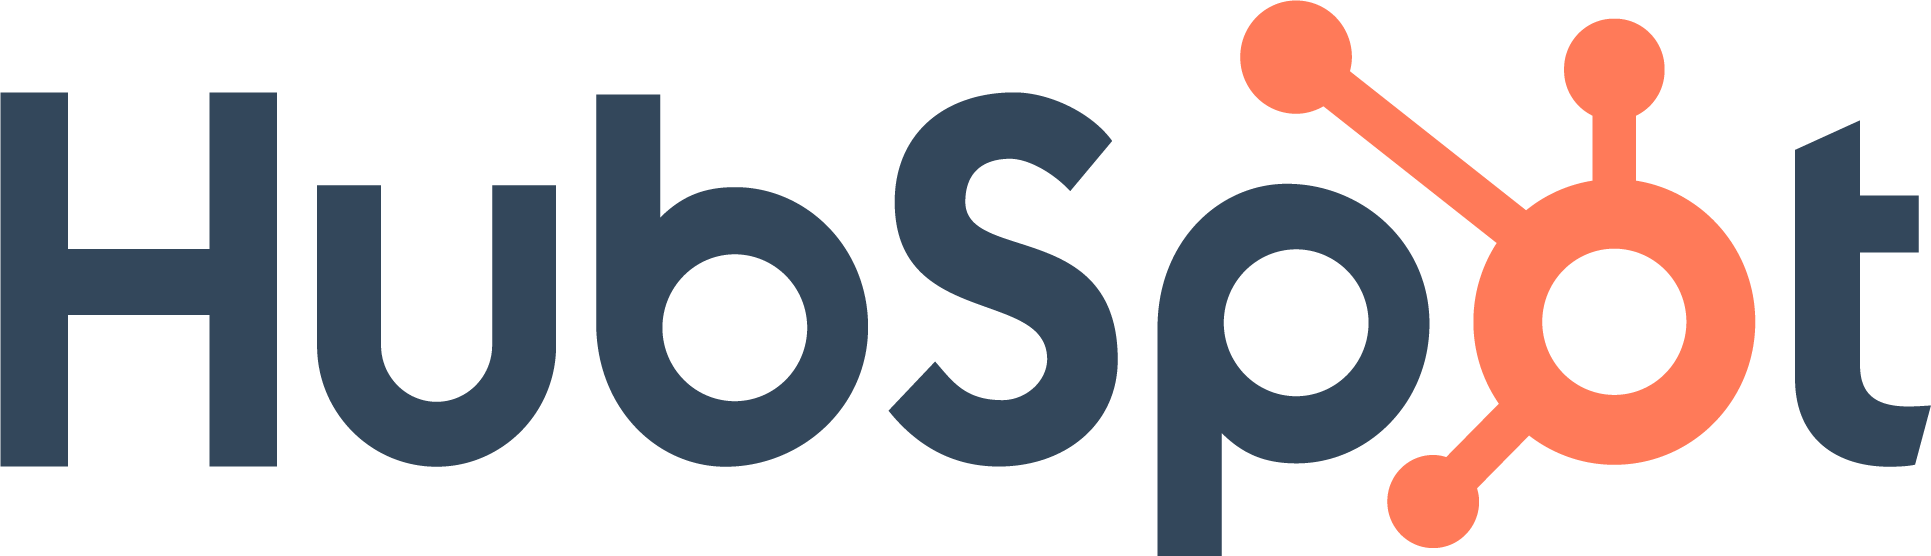 hubspot-source-logo.png